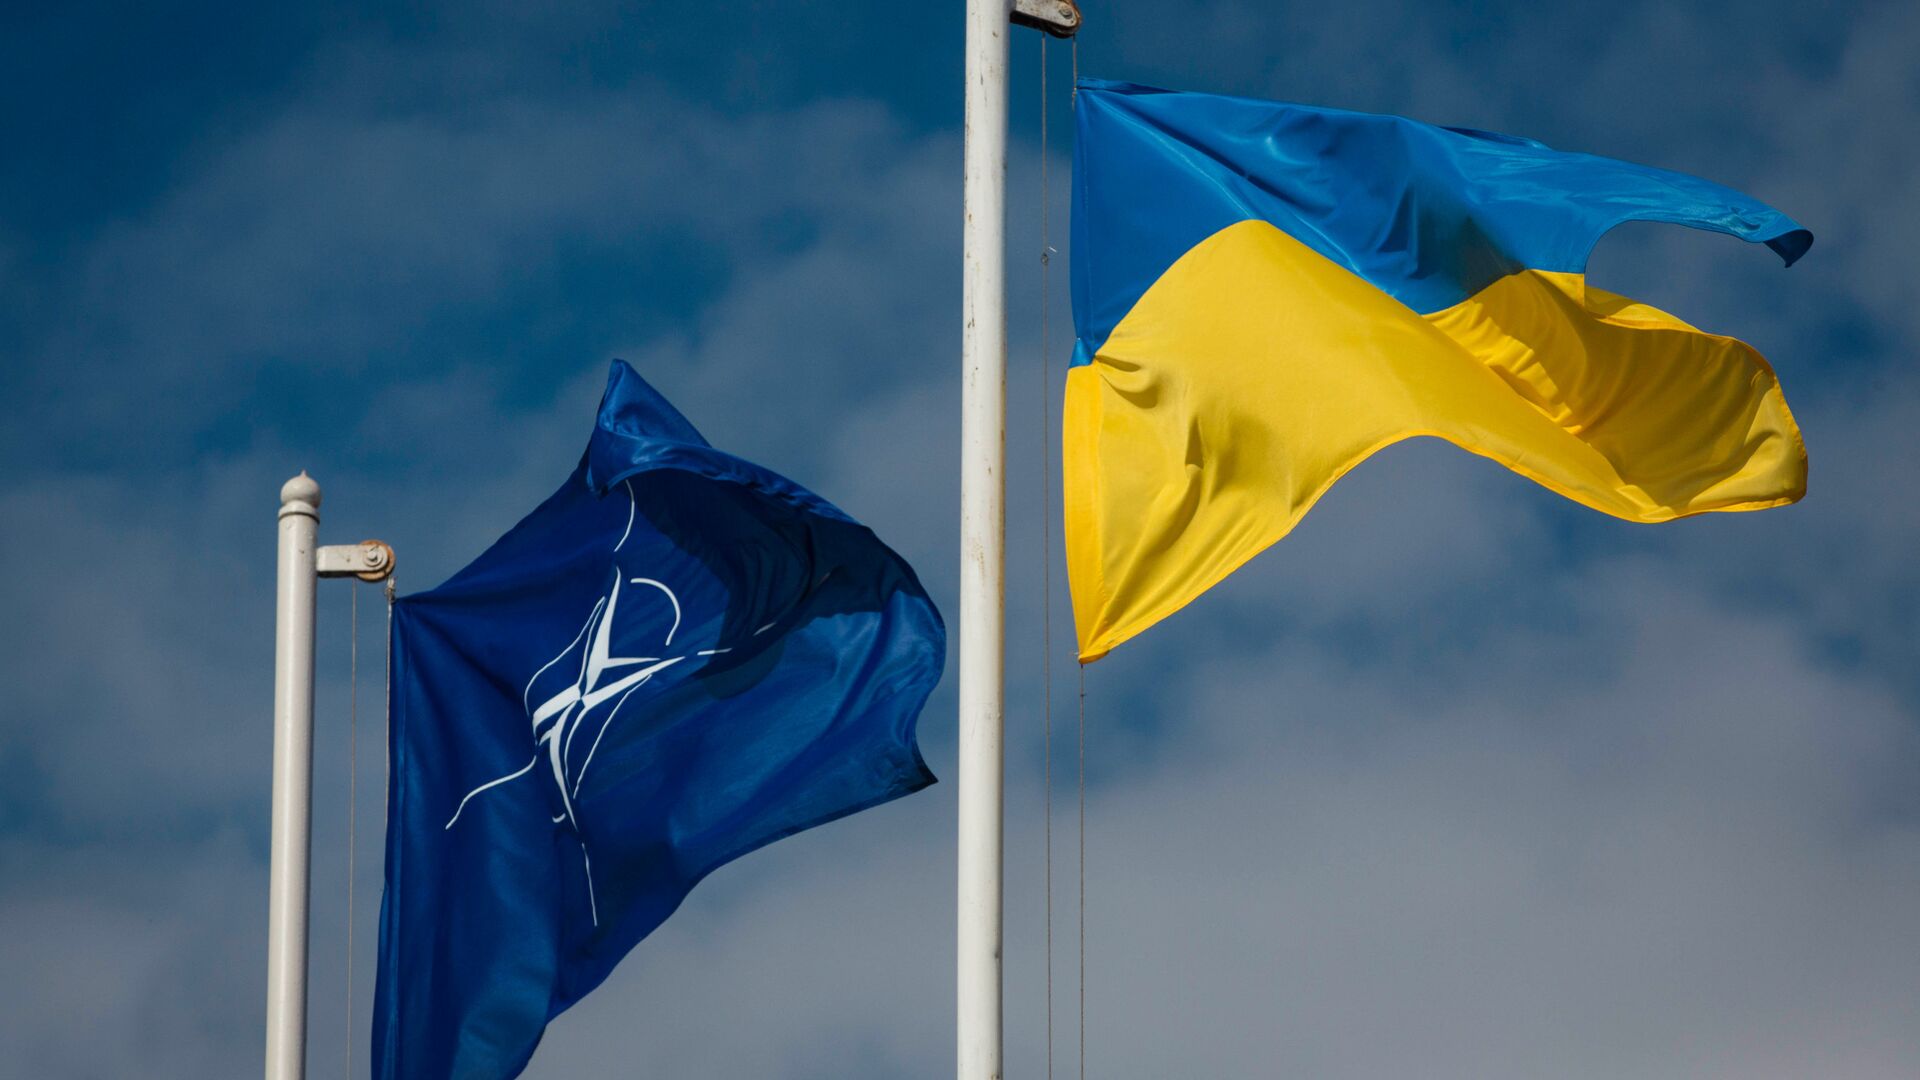 Las banderas de la OTAN y Ucrania - Sputnik Mundo, 1920, 02.12.2021